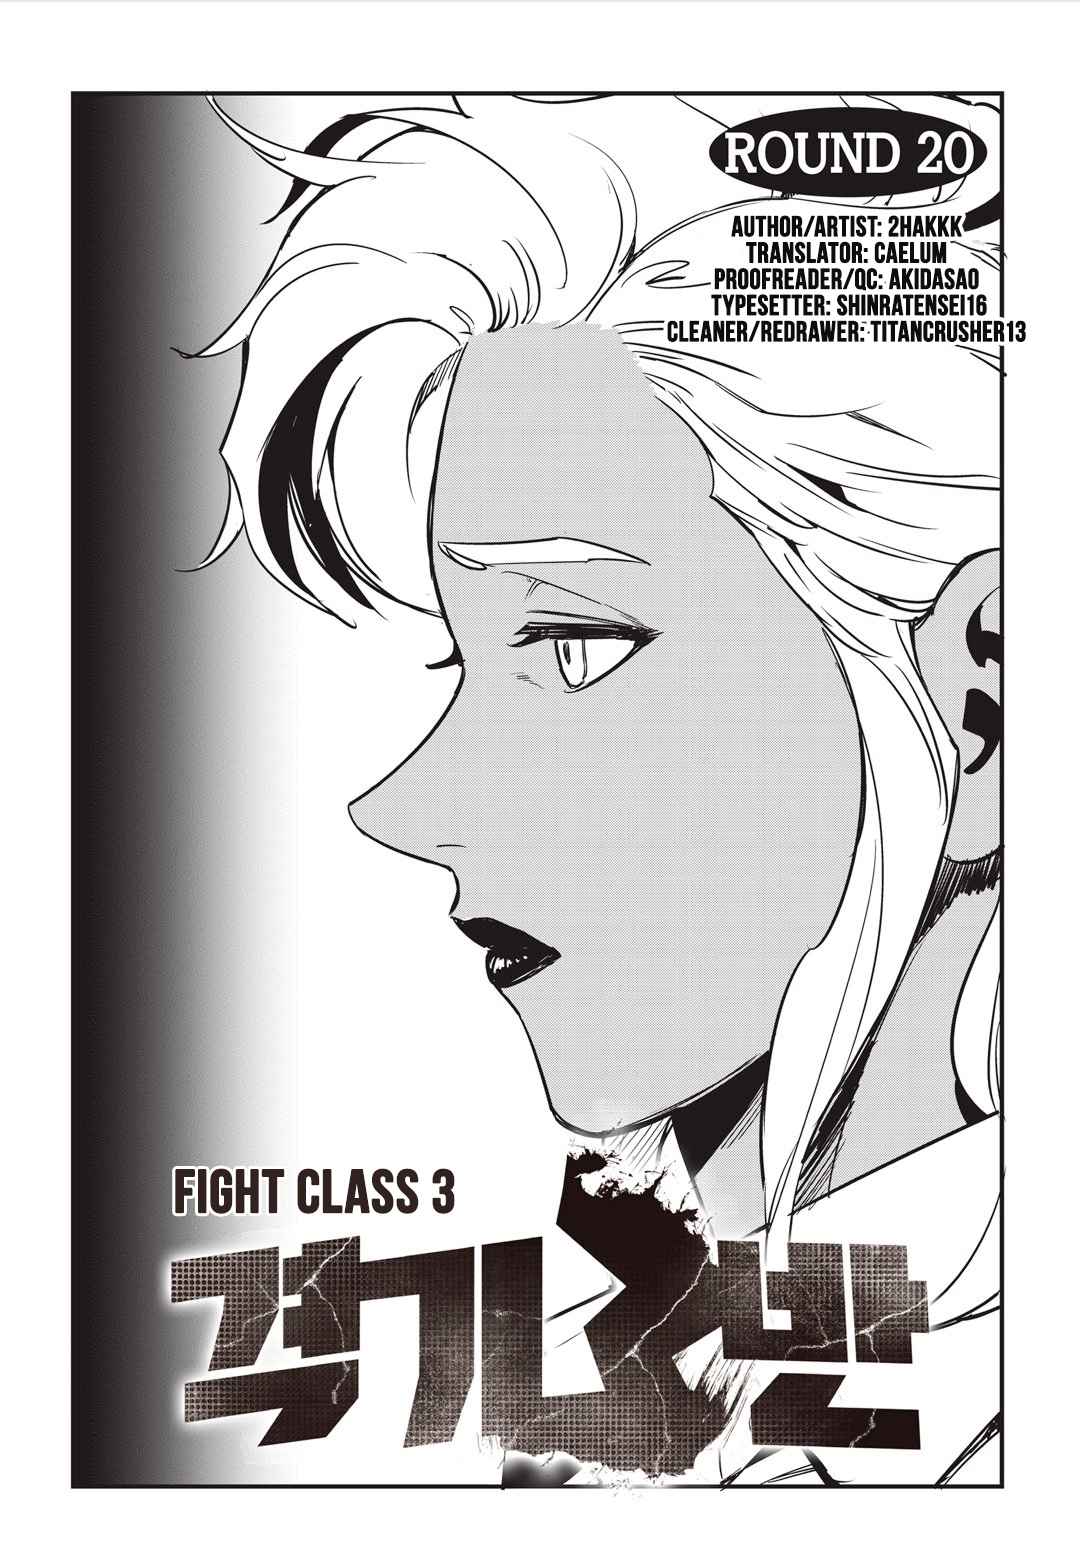 Fight Class 3 Vol. 3 Ch. 20 Round 20